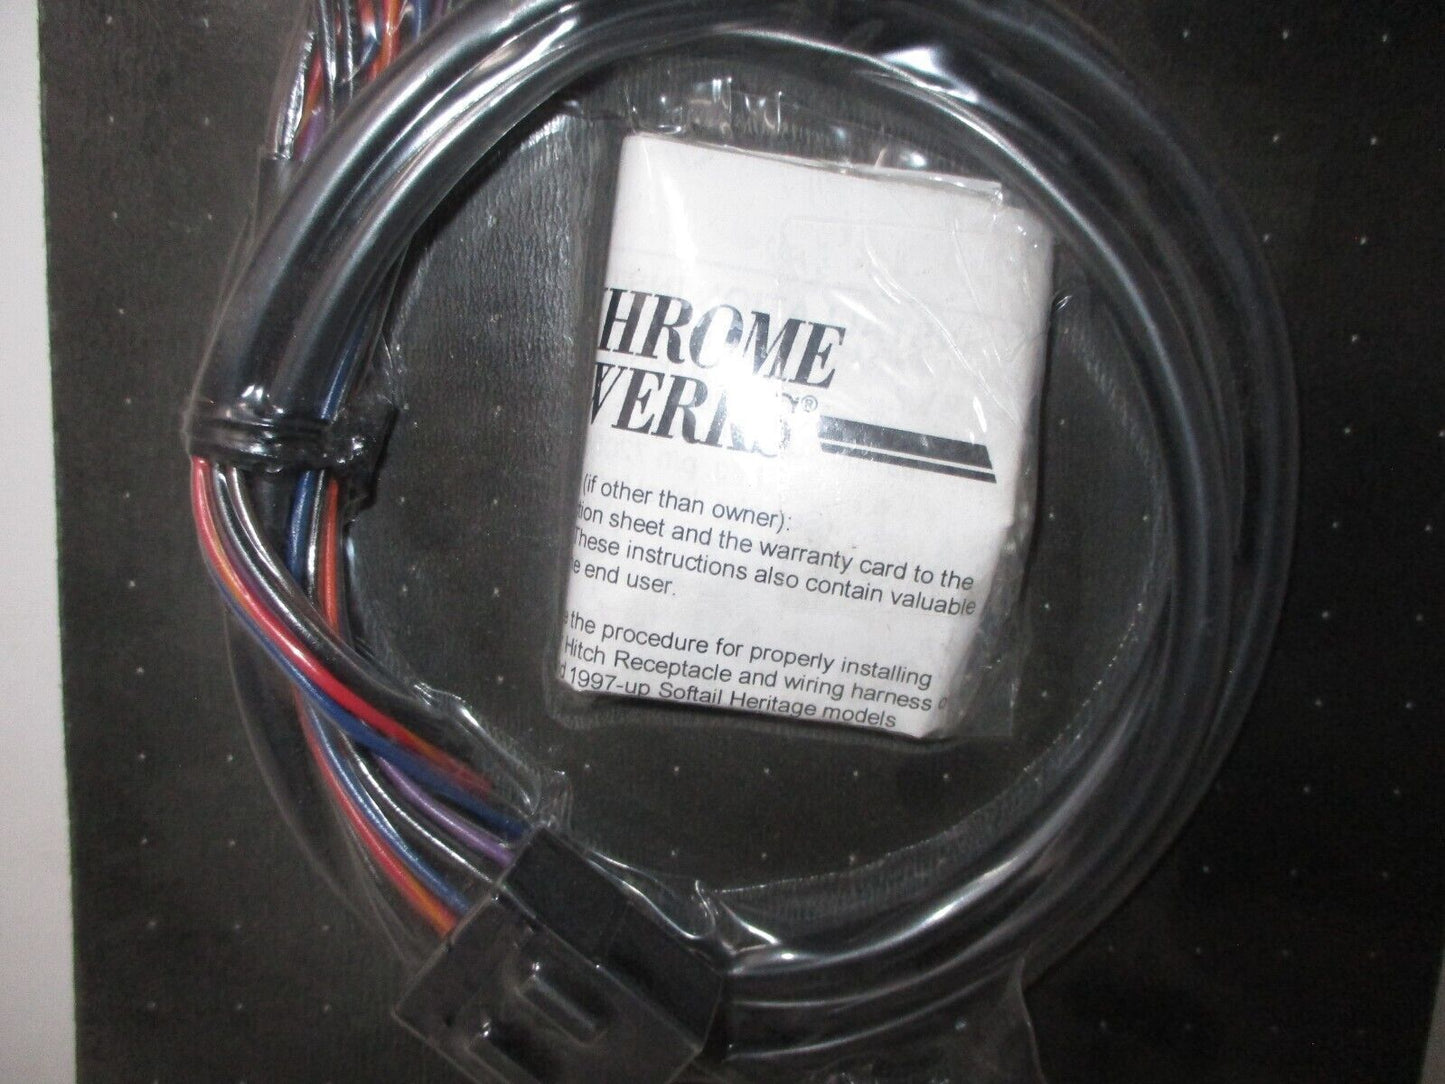 KHROME WERKS  Trailer Wiring Connector Kit 3902-0069